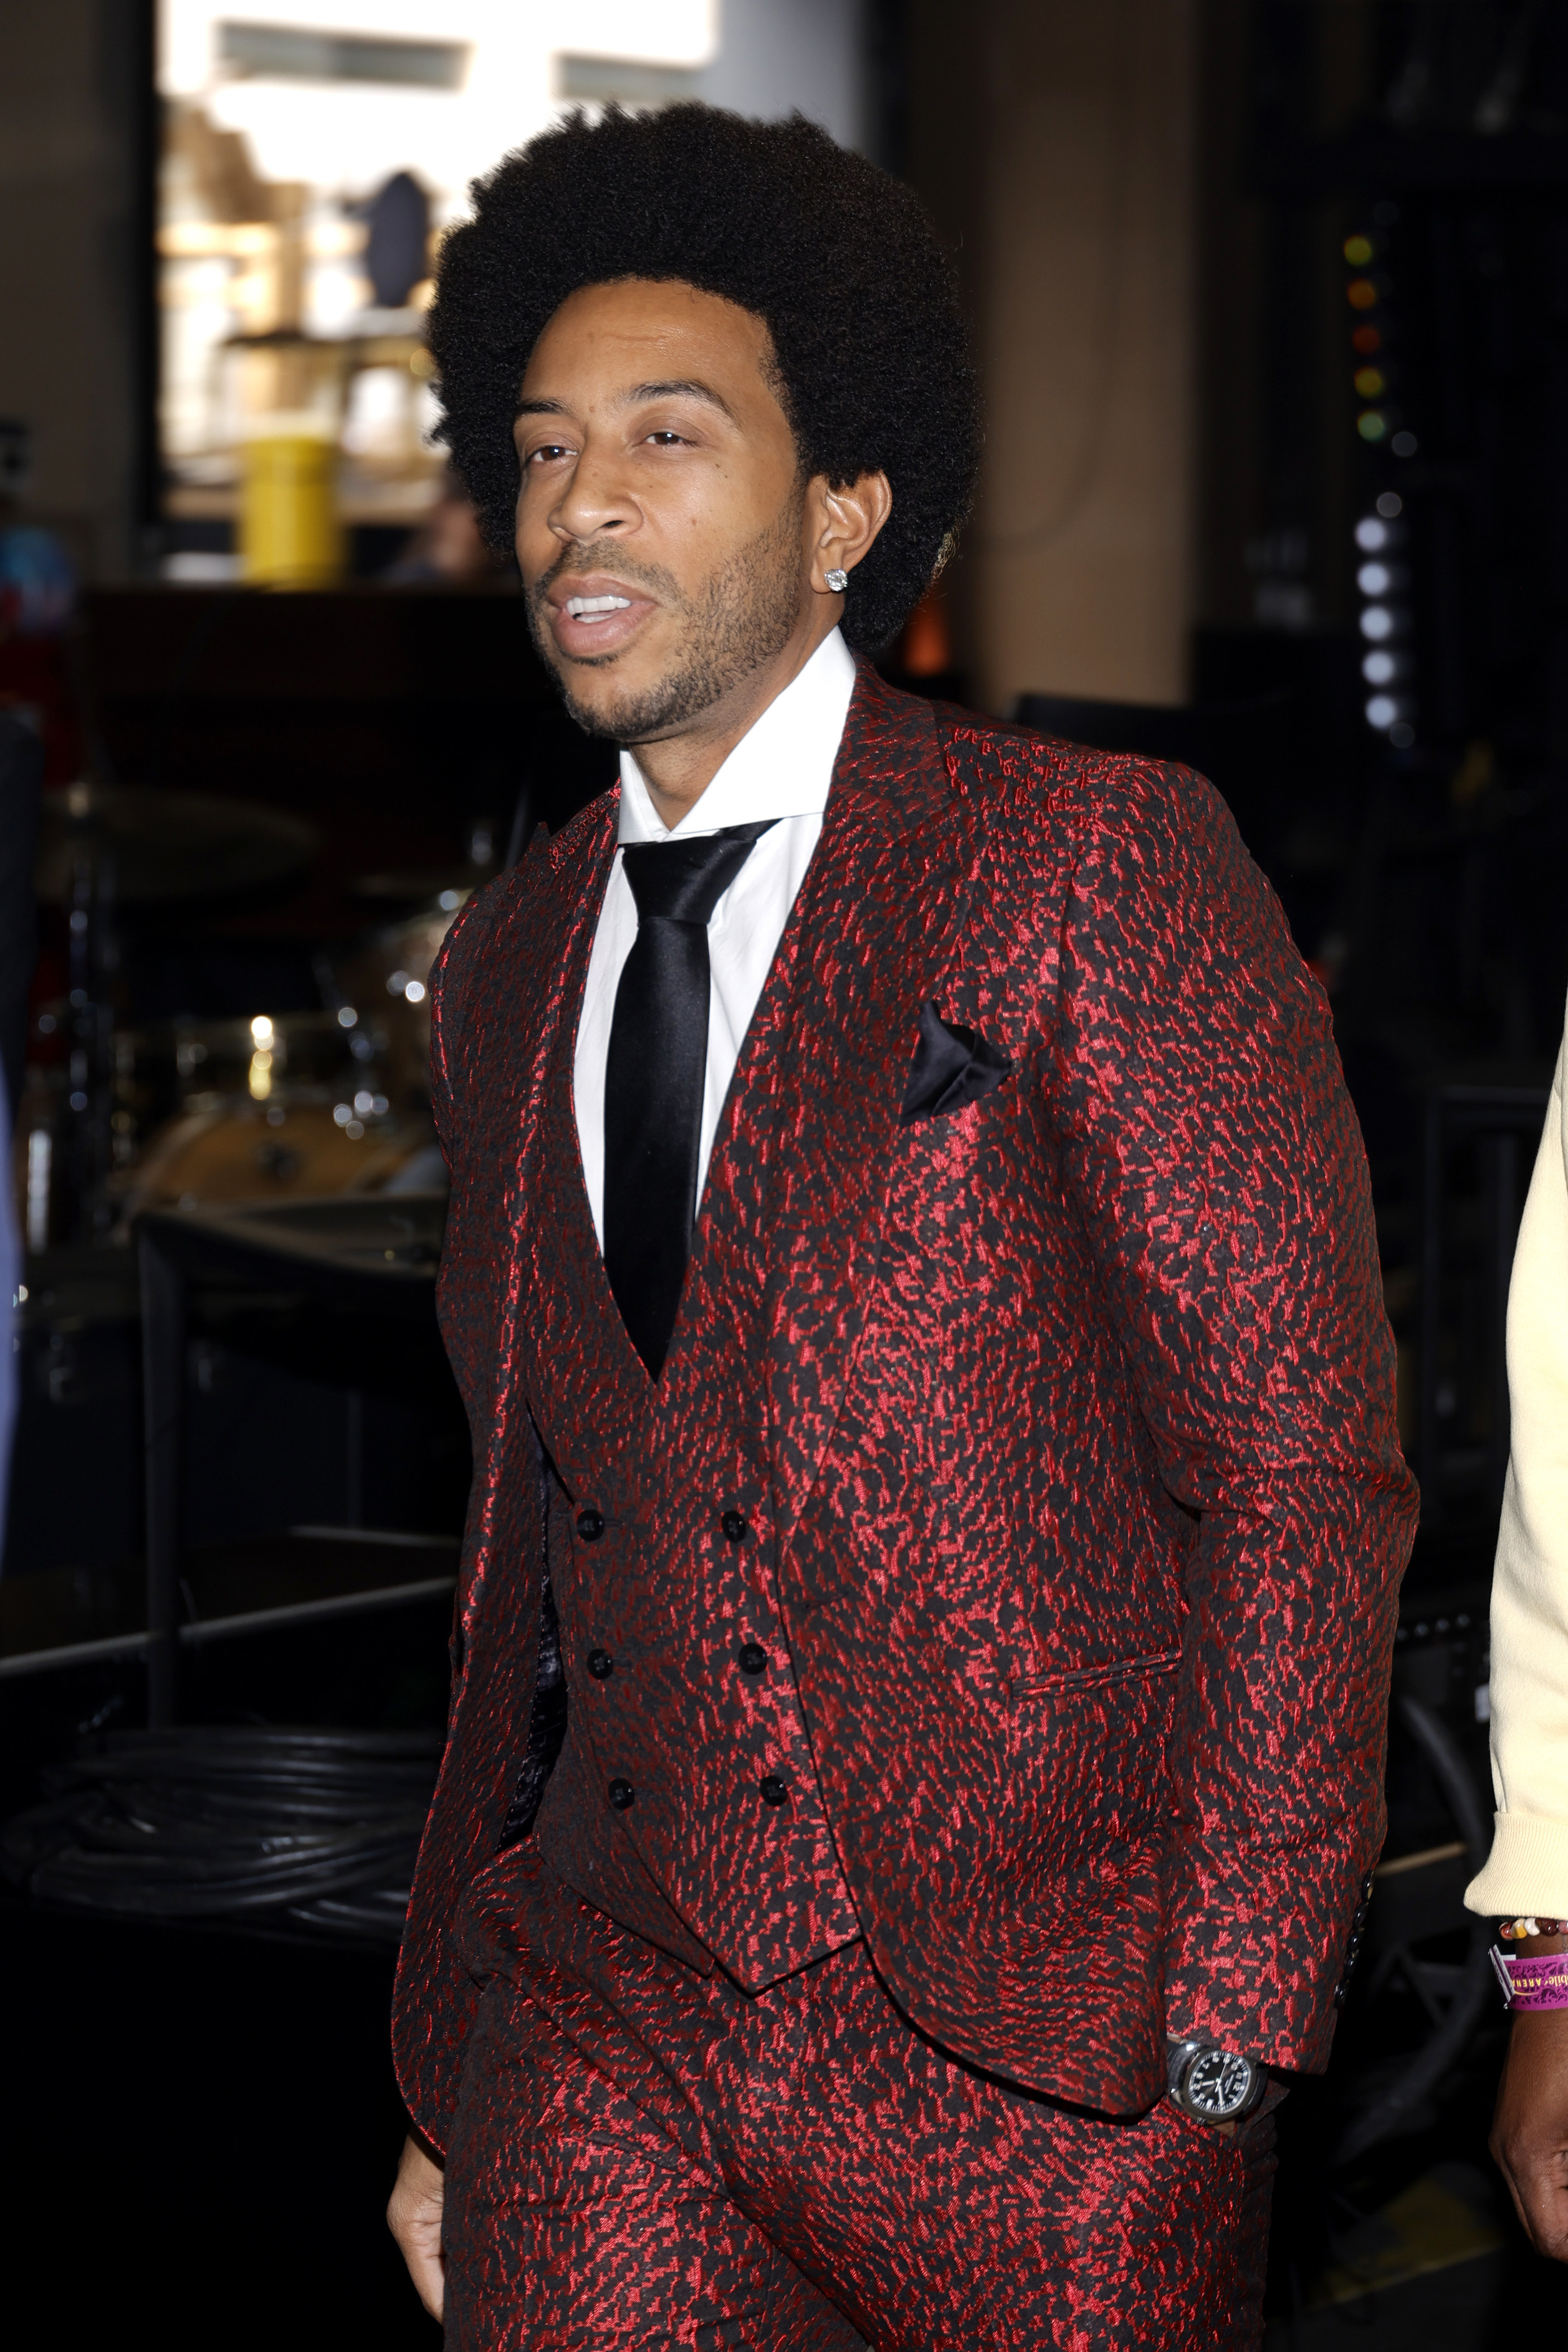 Ludacris wearing a stylish suit